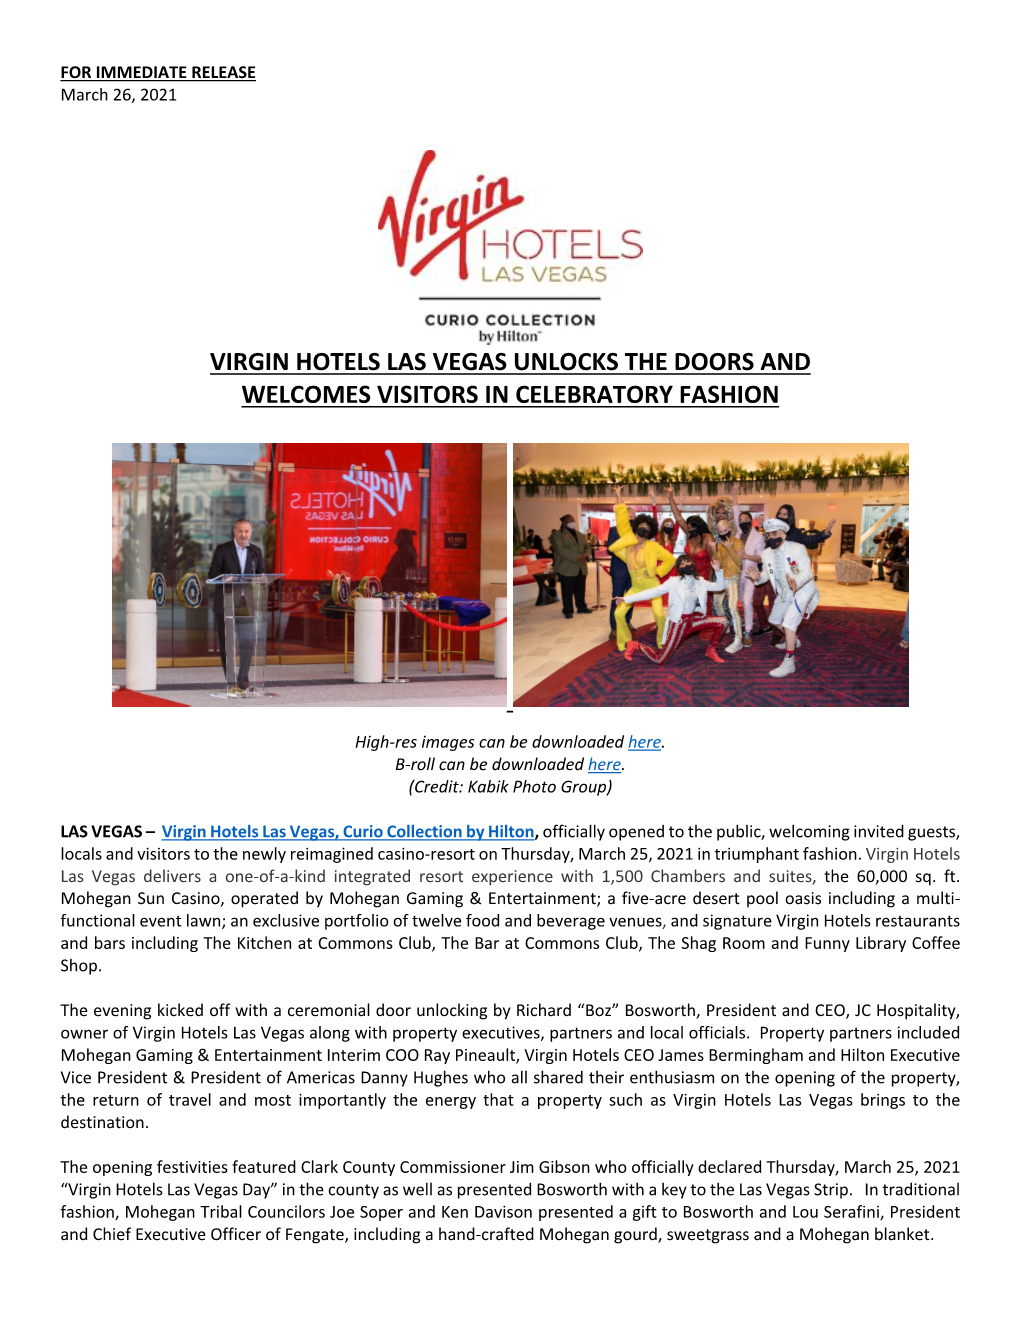 Virgin Hotels Las Vegas Unlocks the Doors and Welcomes Visitors in Celebratory Fashion